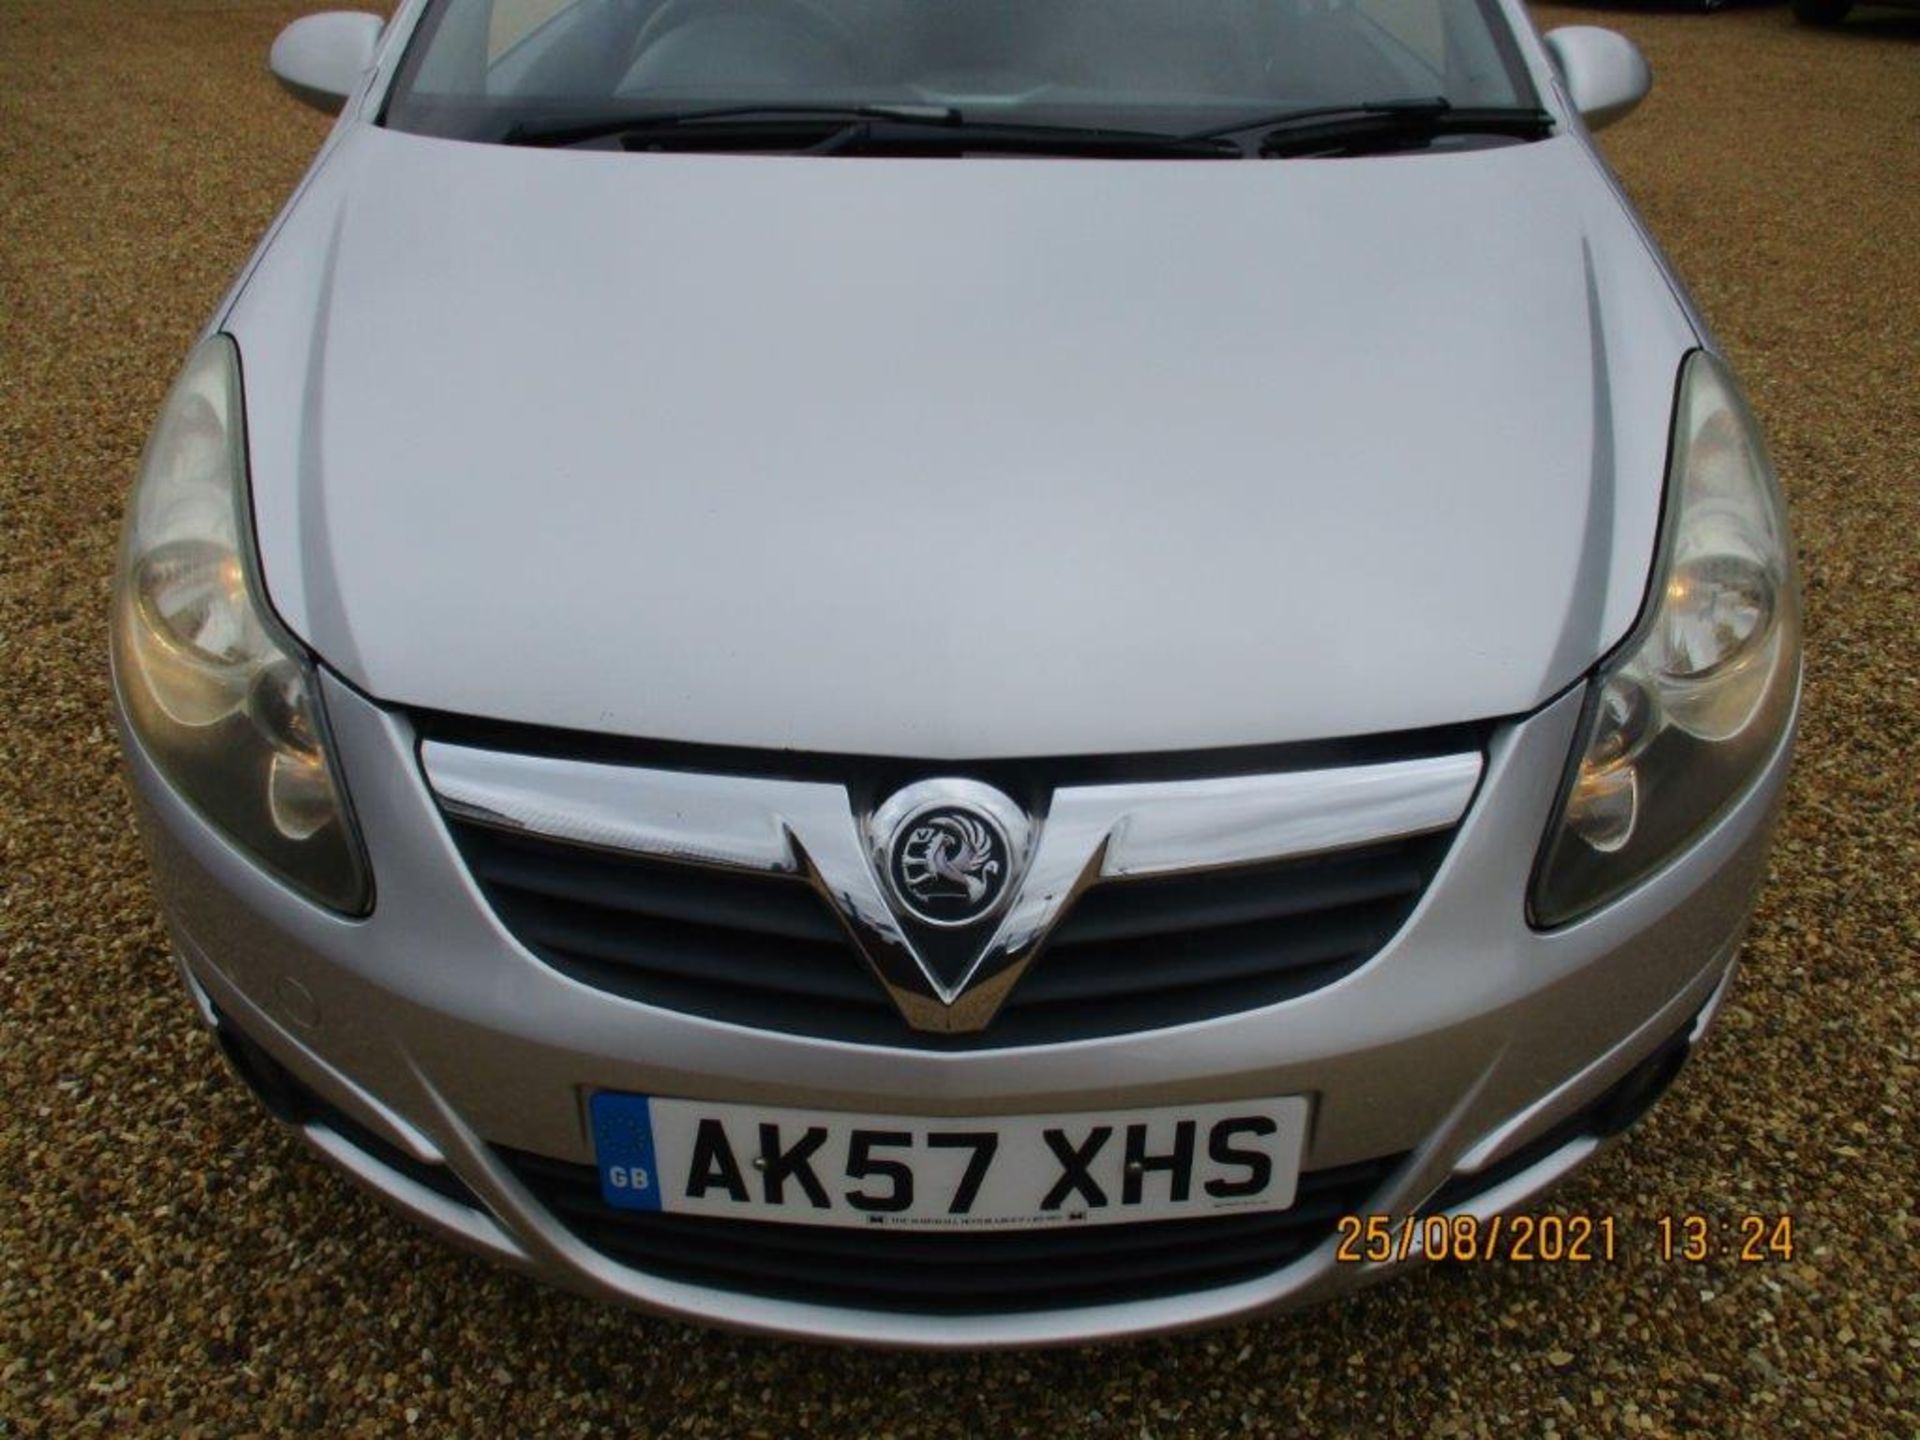 07 57 Vauxhall Corsa SXI 3dr - Image 8 of 17